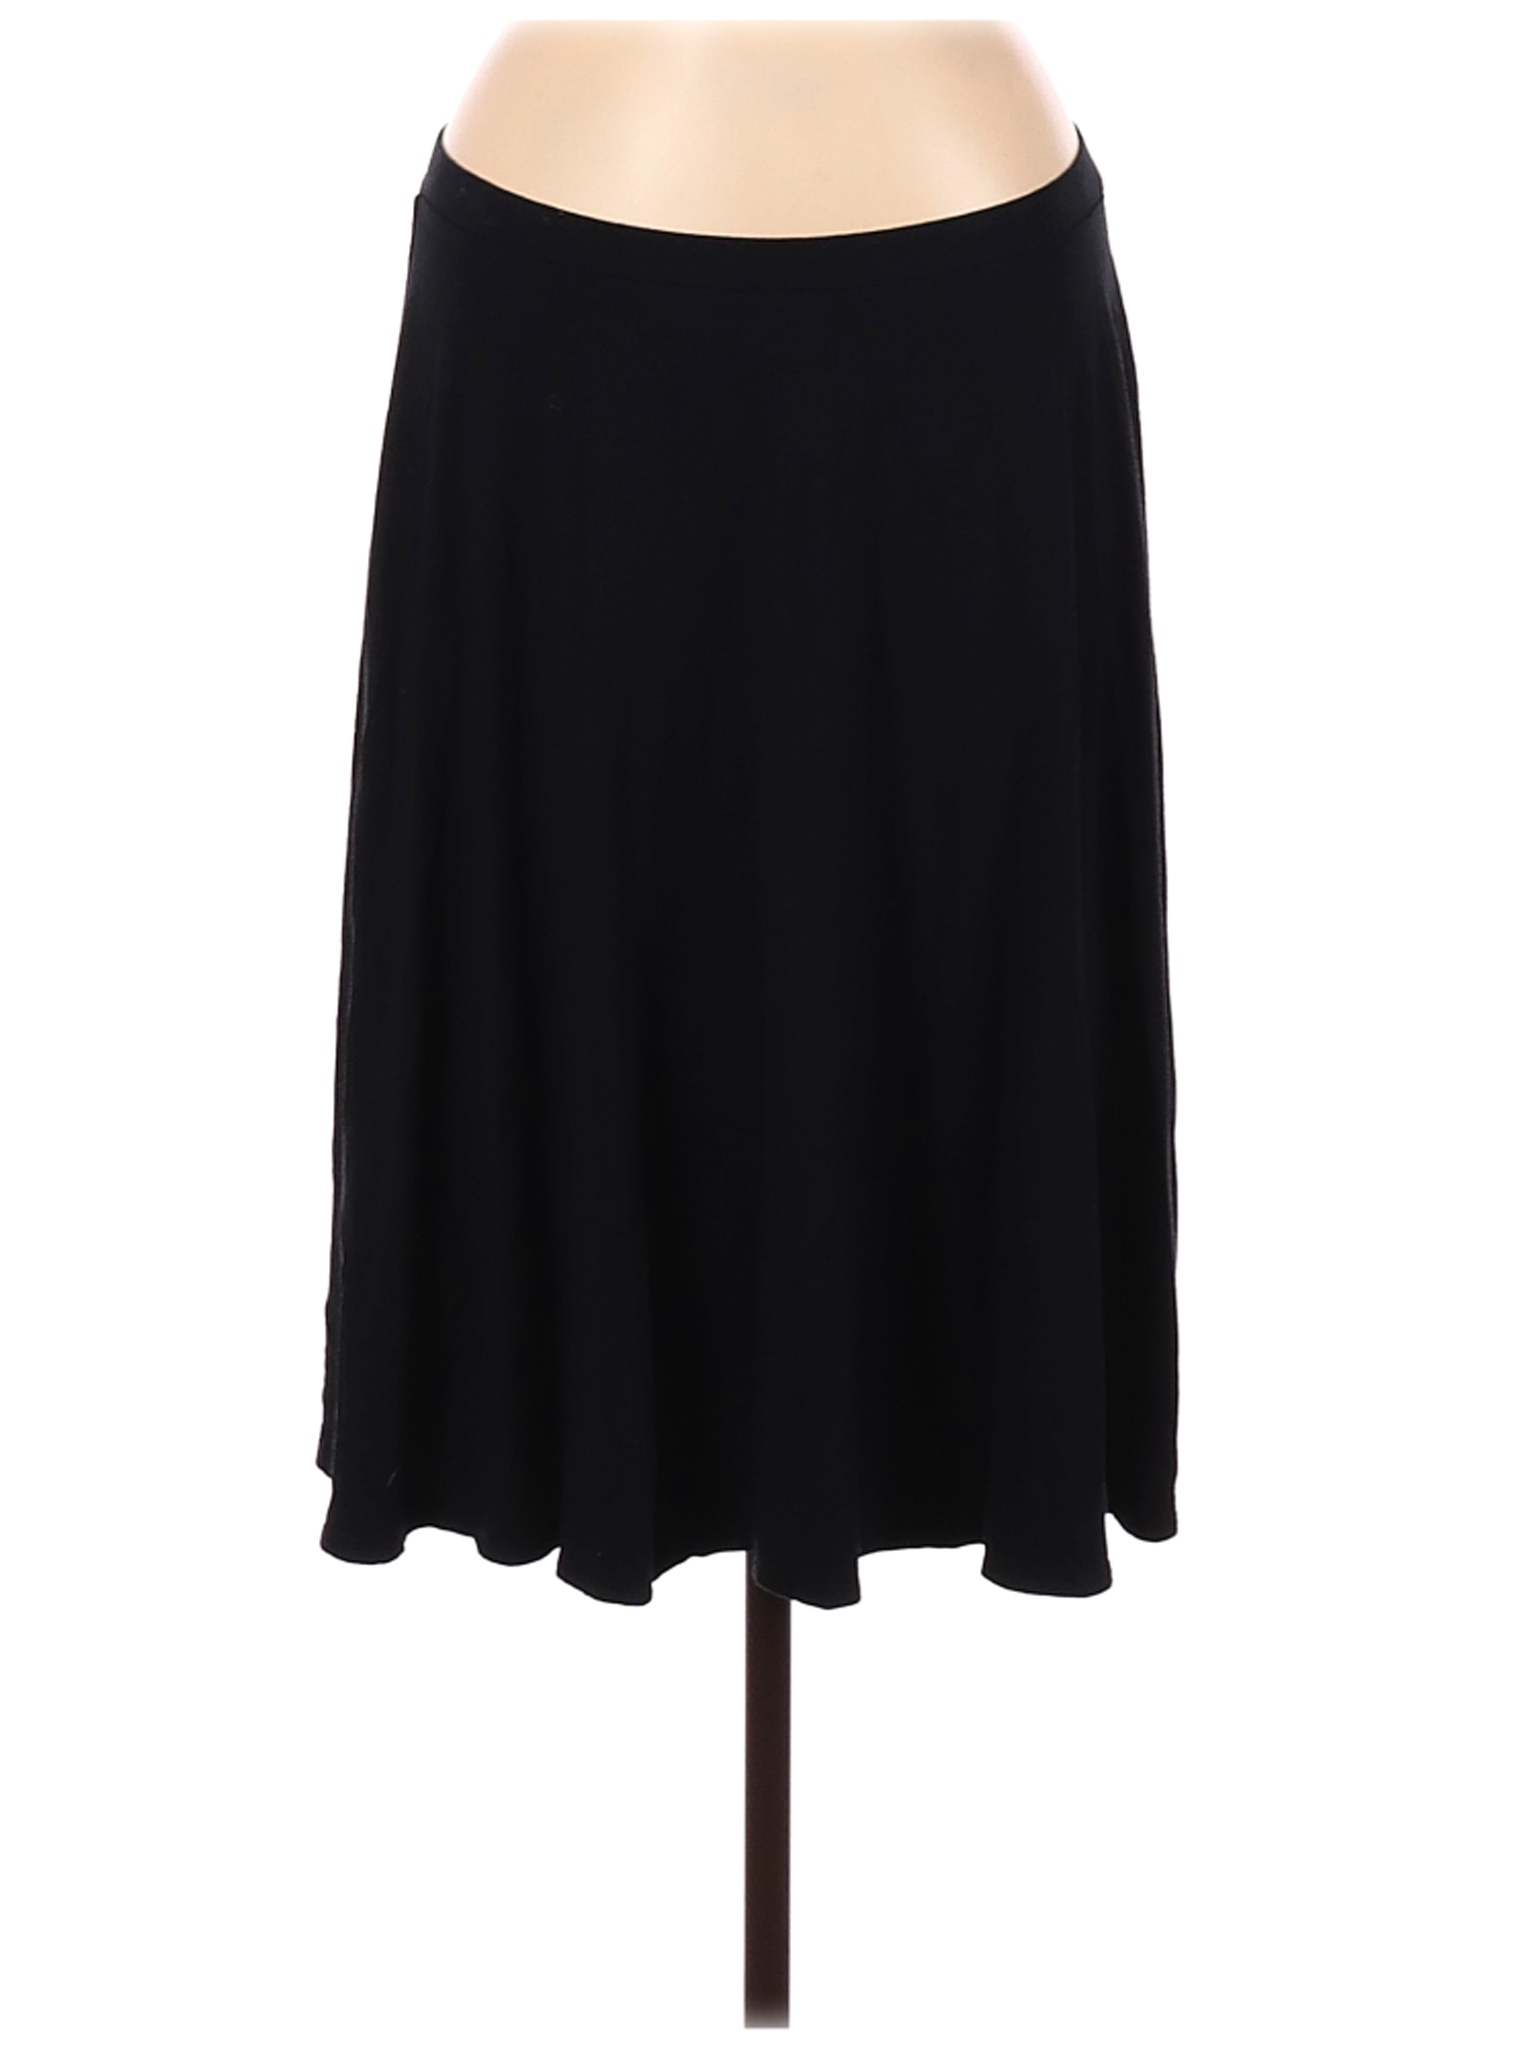 Lands' End Women Black Casual Skirt M | eBay